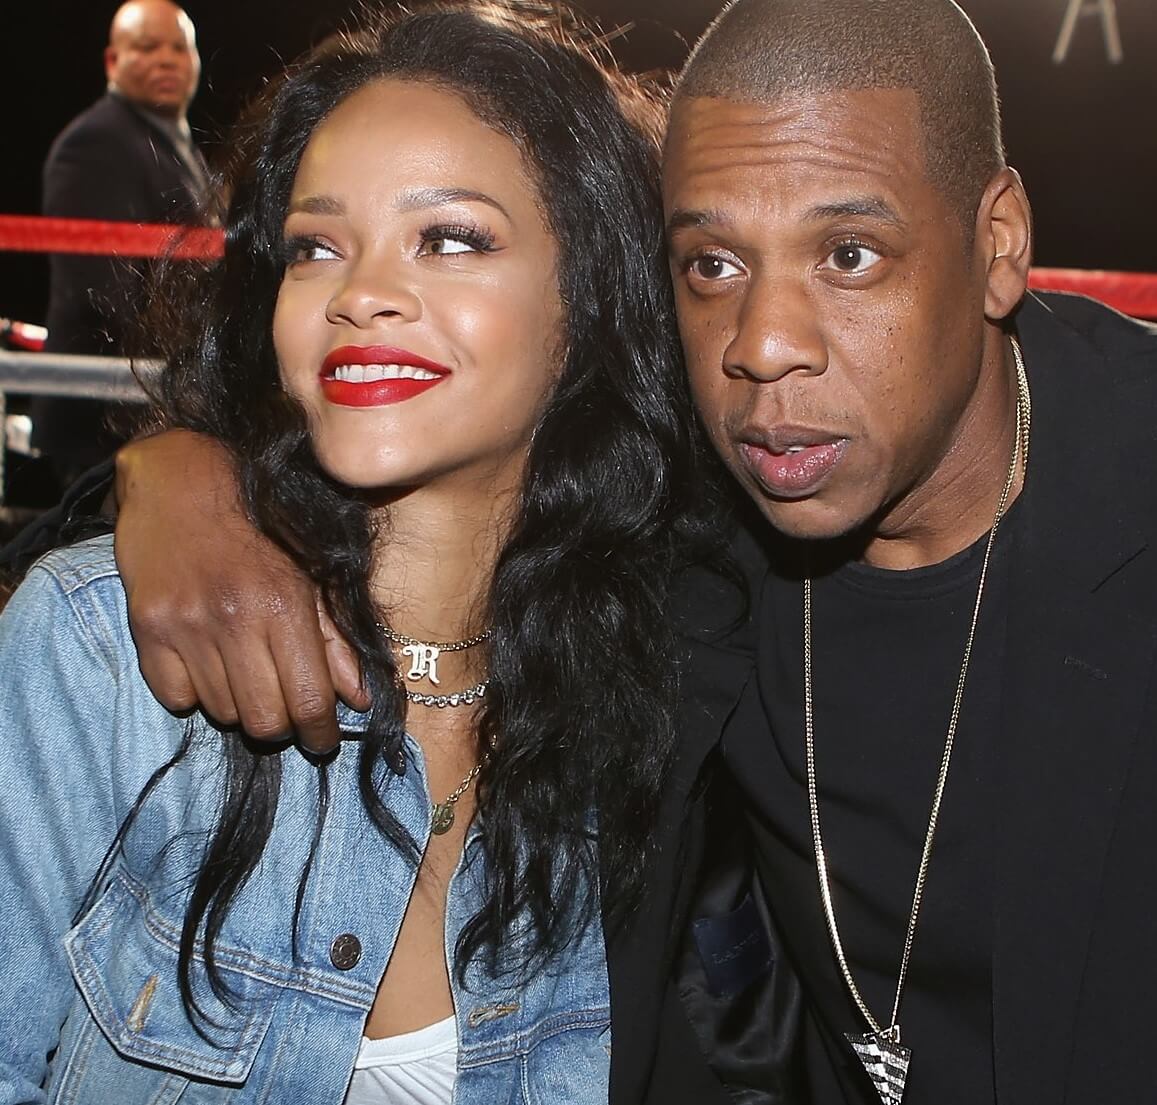 Jay-Z with his arm around Rihanna